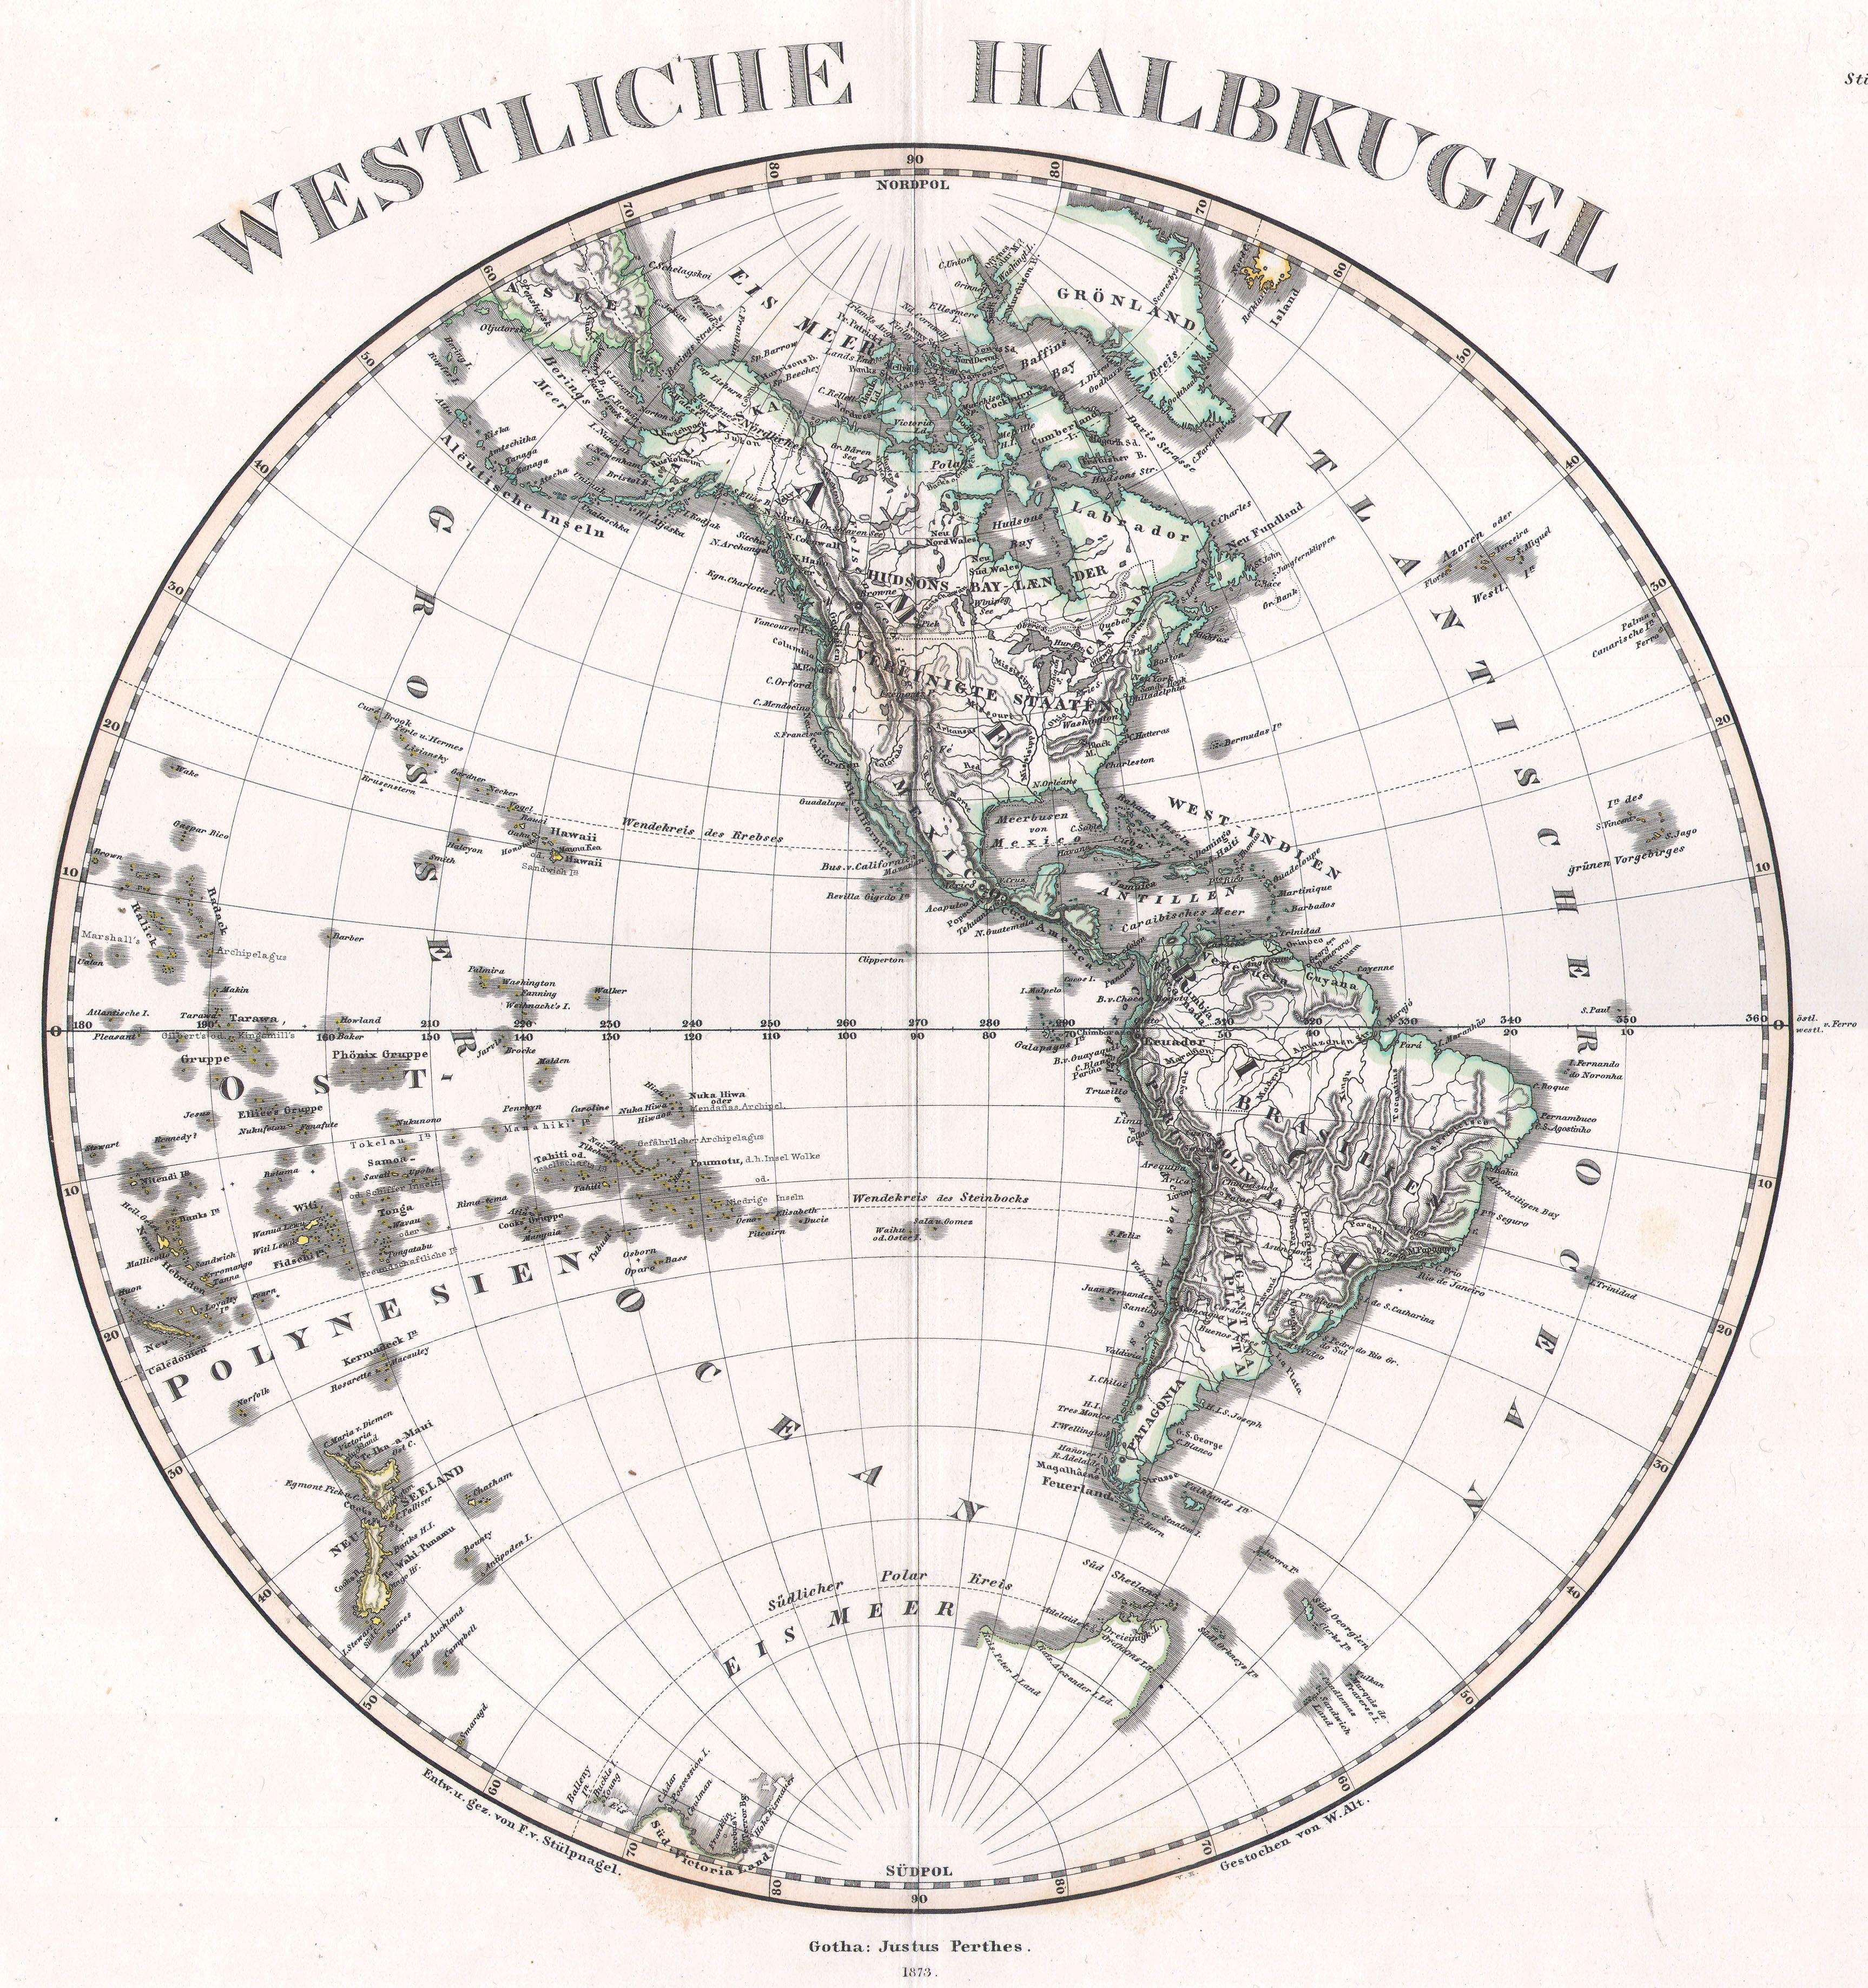 western hemisphere political map blank